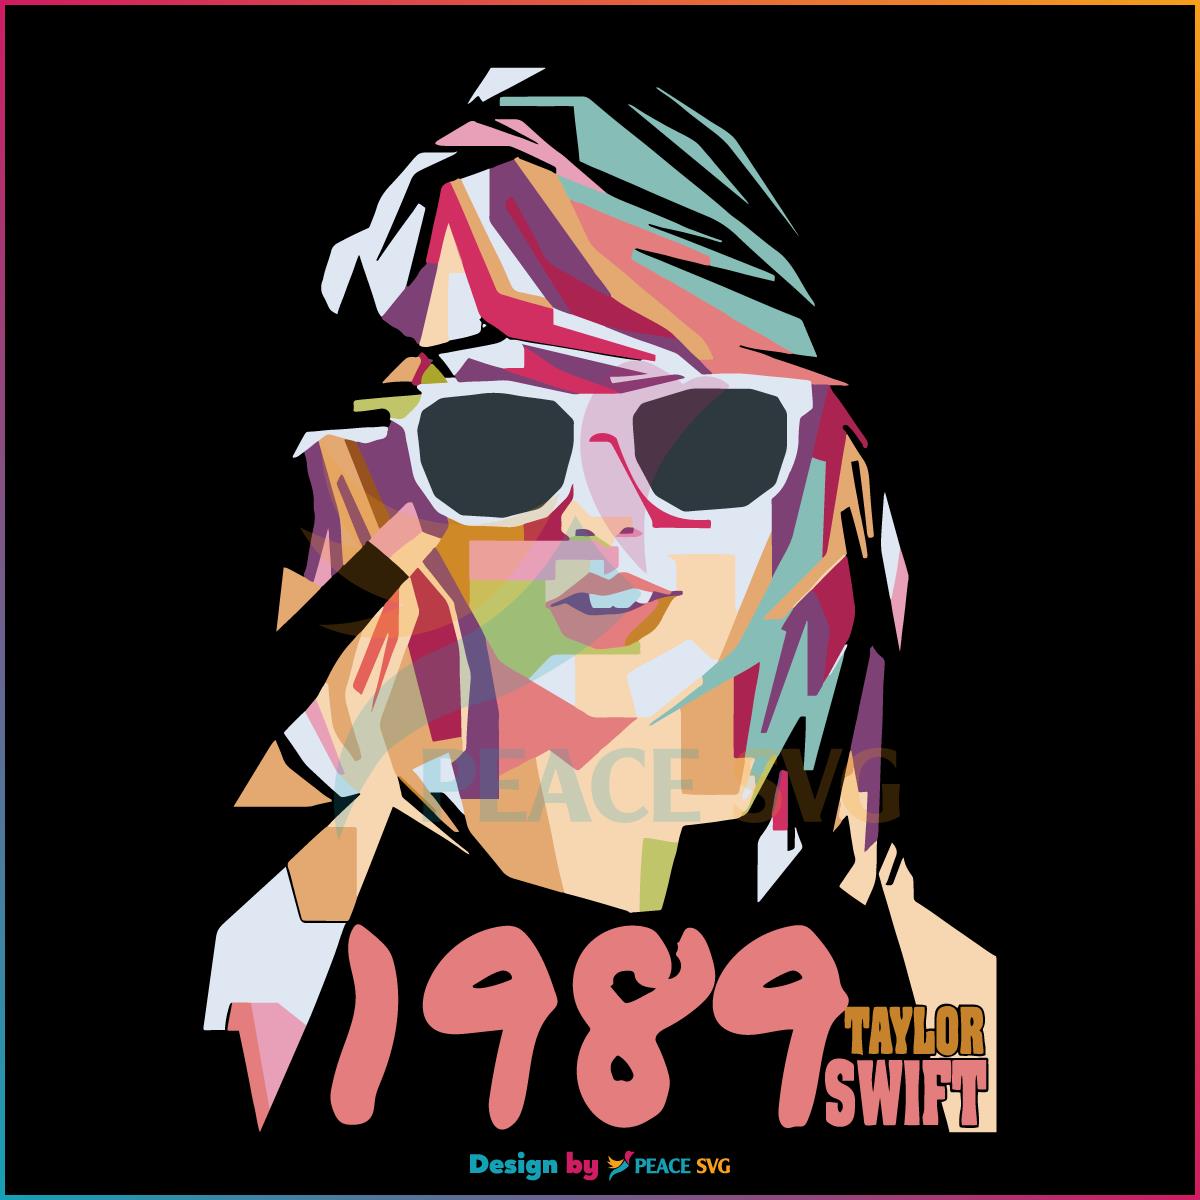 1989 Taylor Swift Eras Tour Png